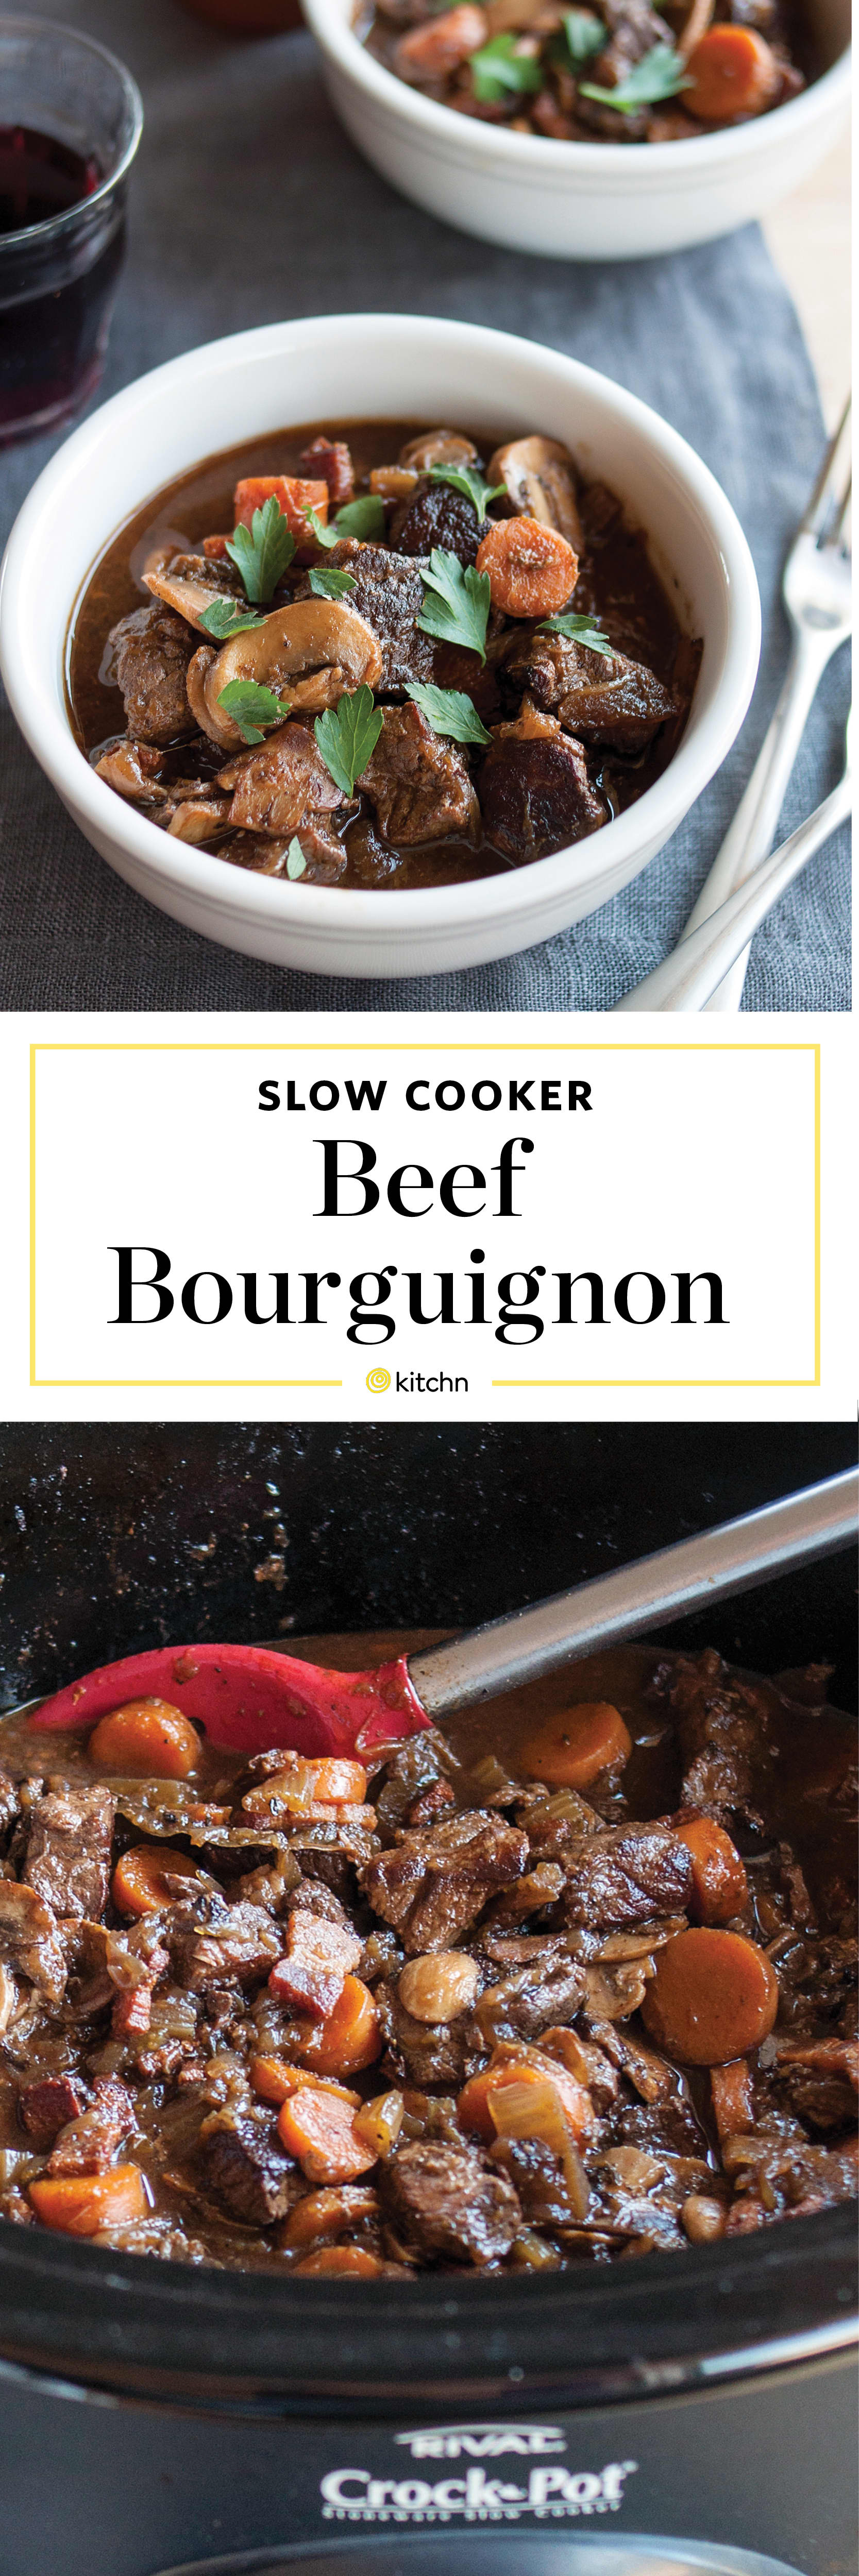 Slow Cooker Boeuf Bourguignon | Kitchn